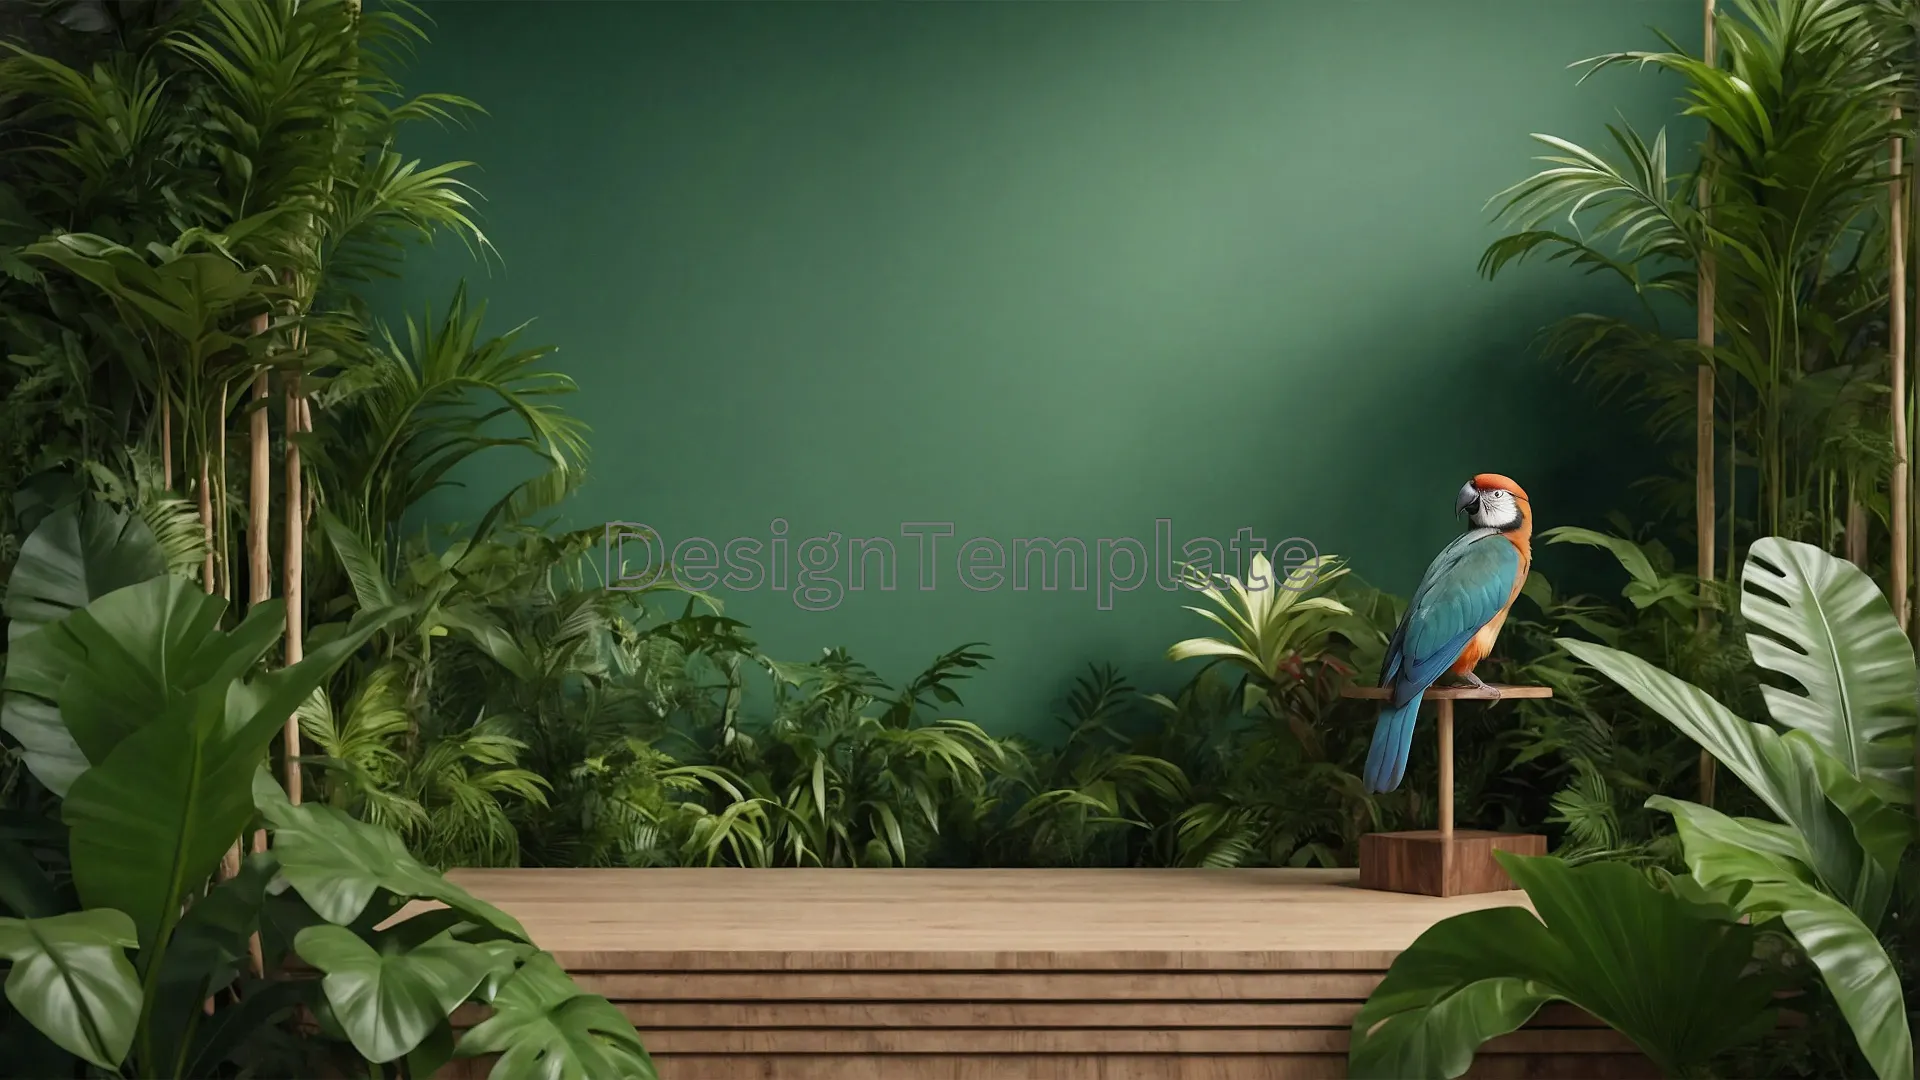 Minimalist Garden Room Sleek Plant-Filled Space Background image